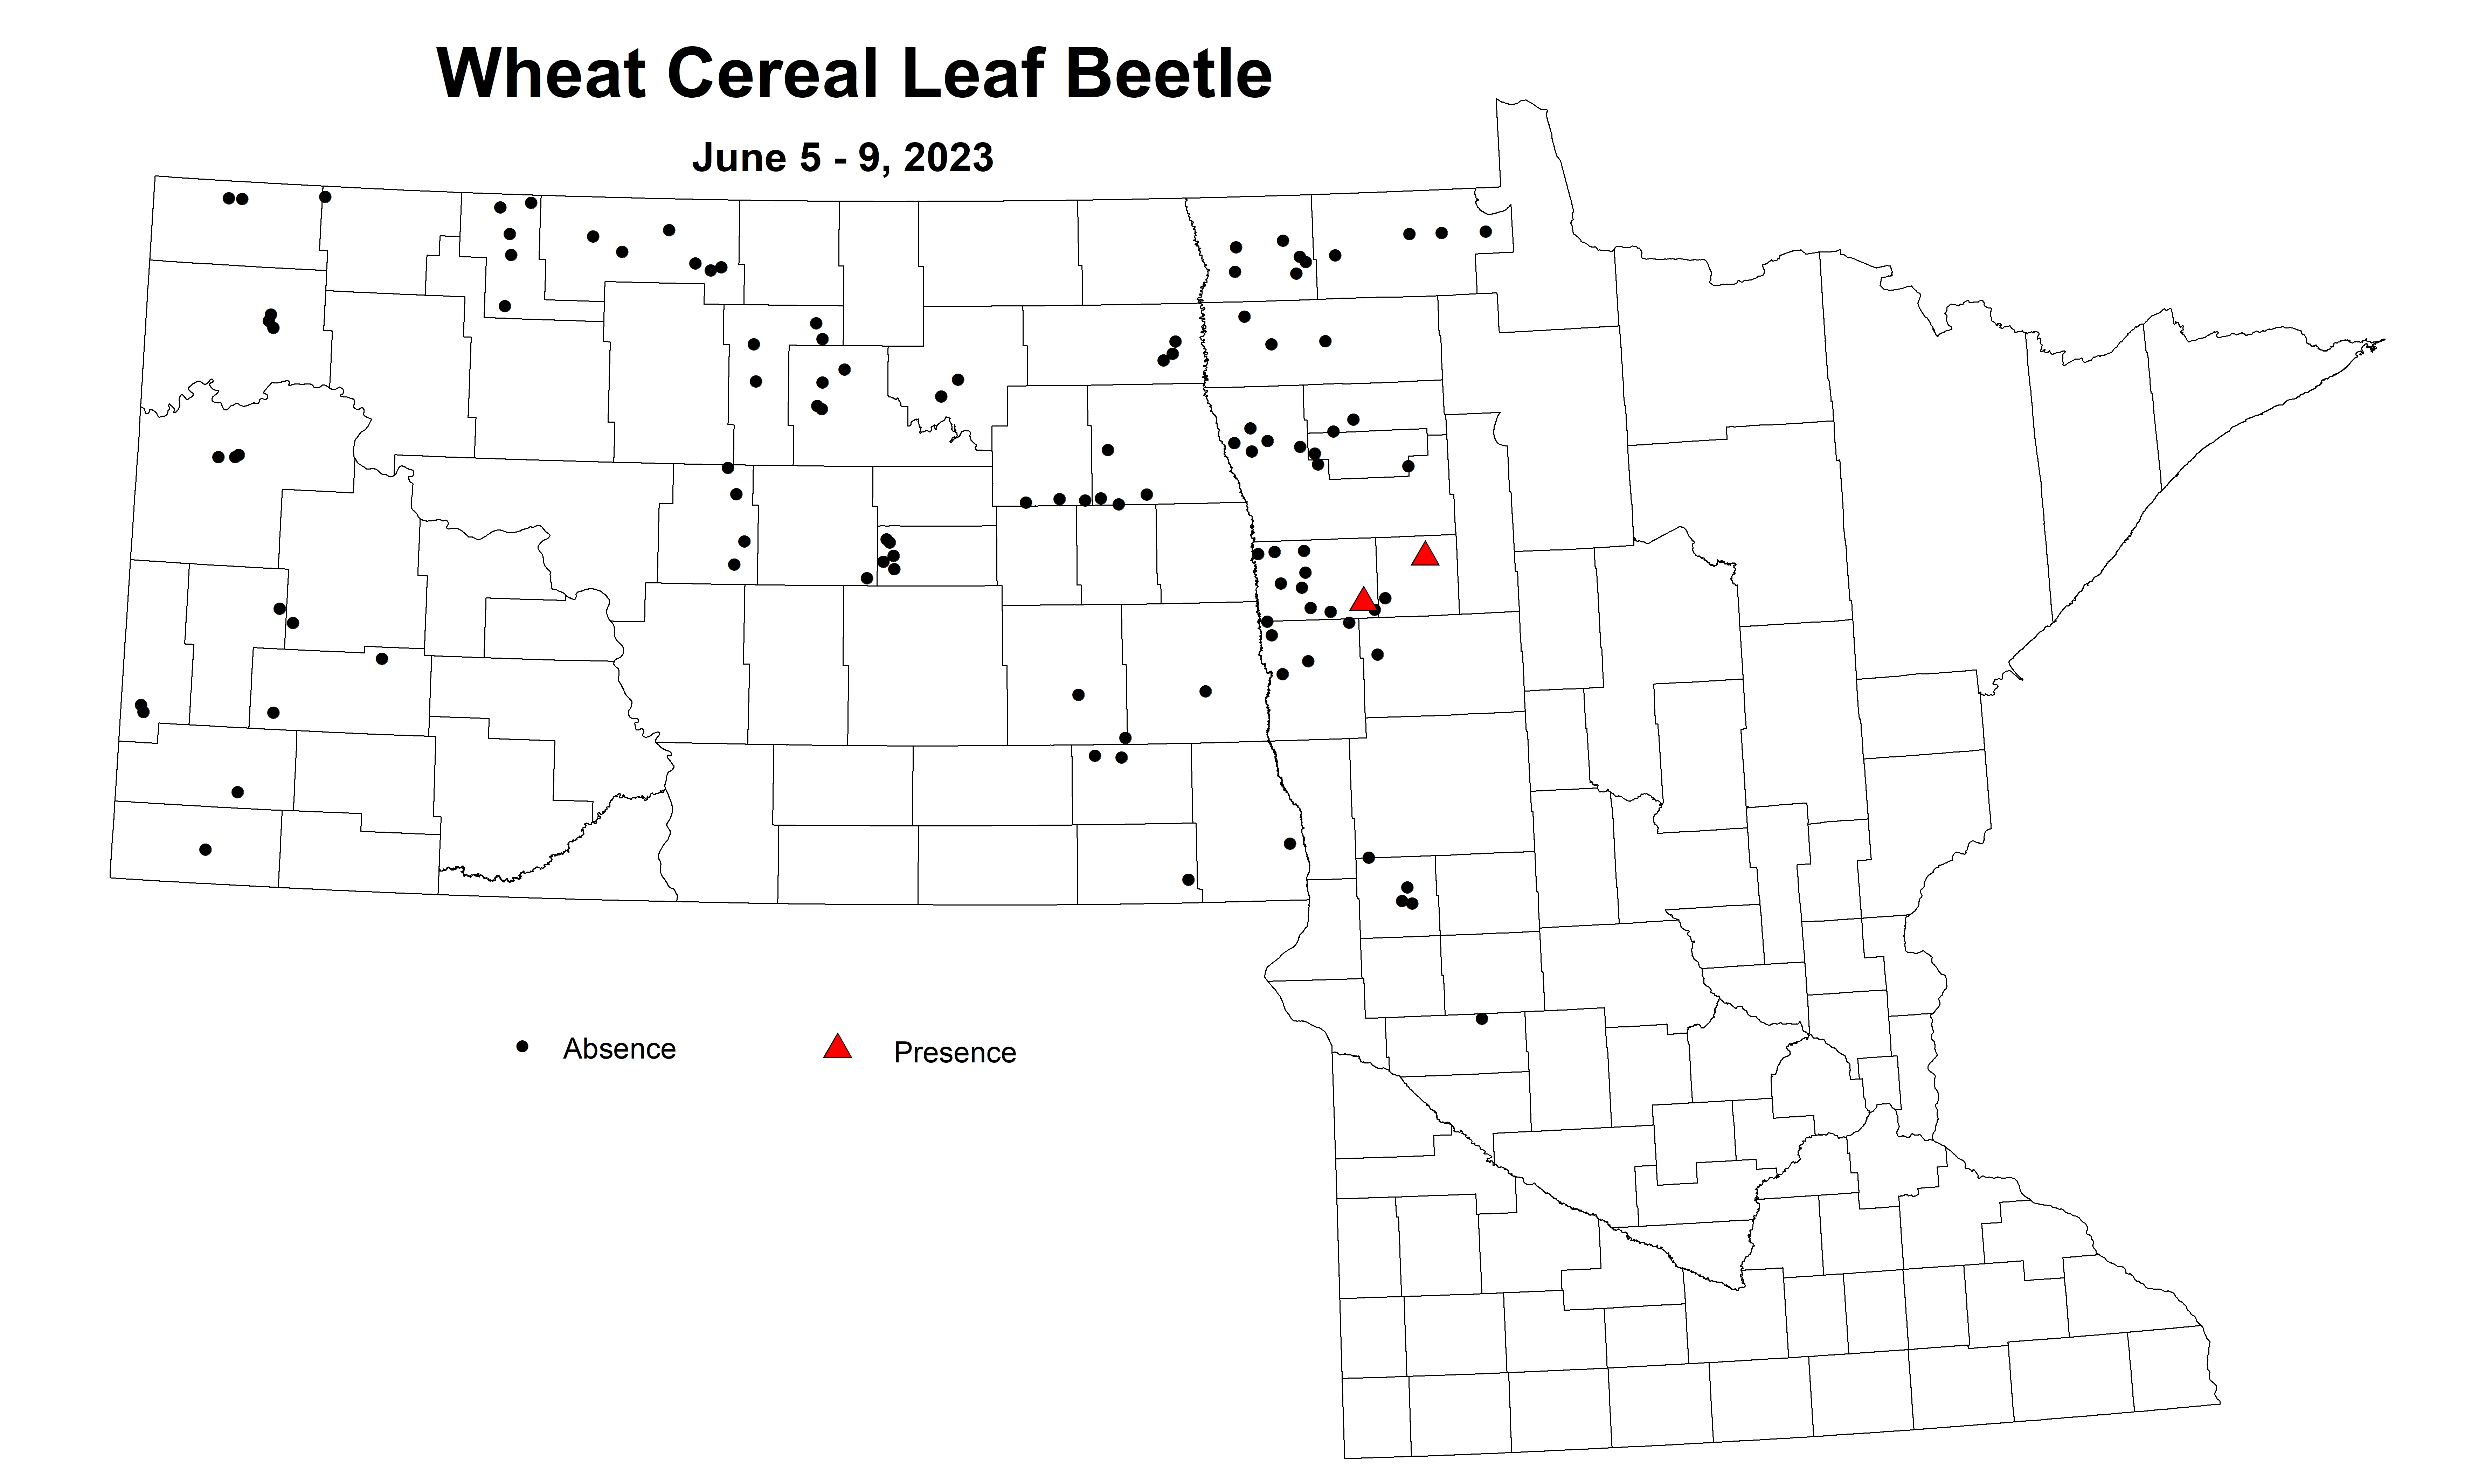 wheat cereal leaf beetle June 5-9 2023